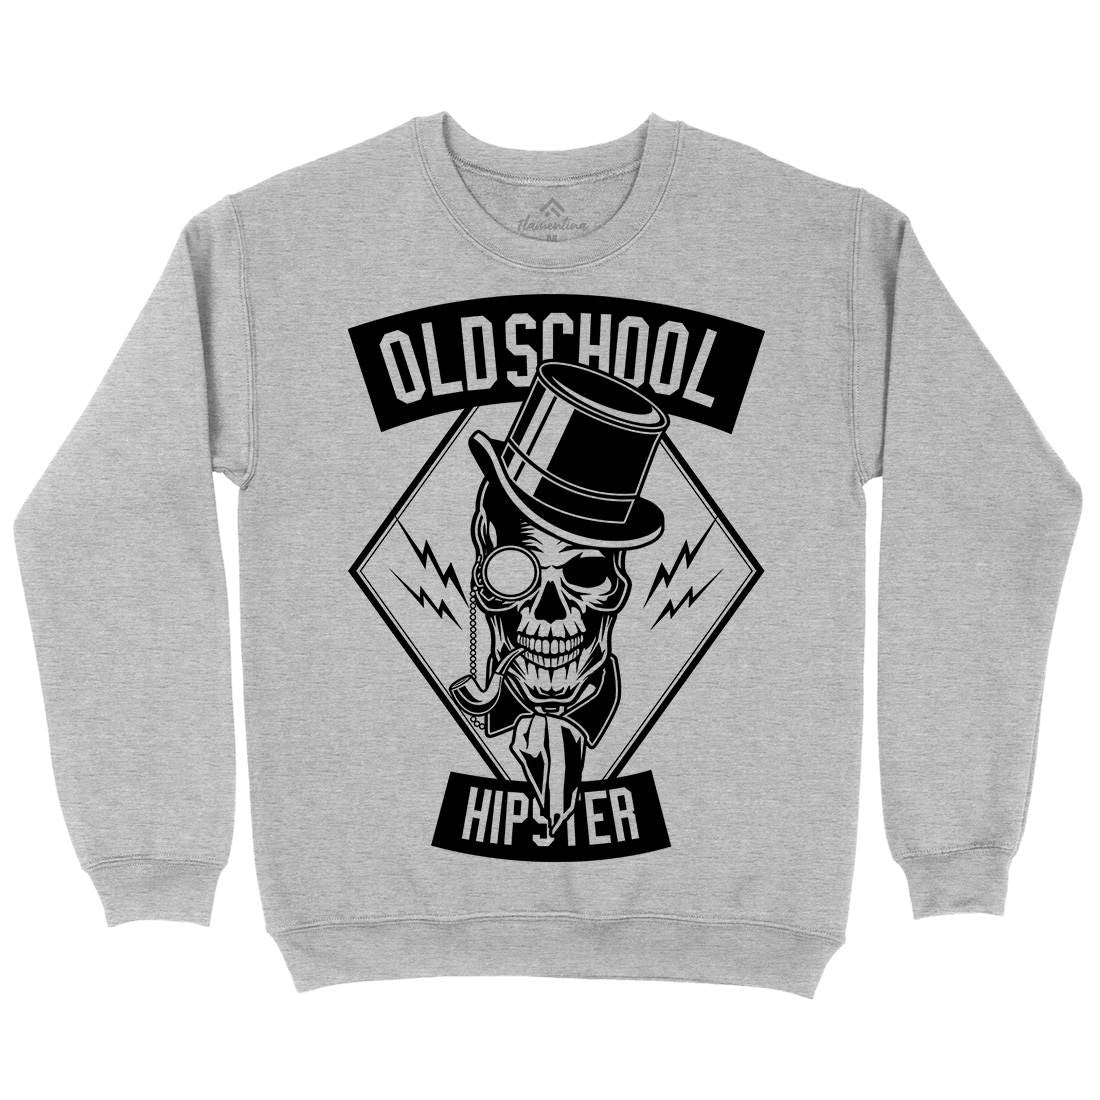 Old School Hipster Kids Crew Neck Sweatshirt Retro B592